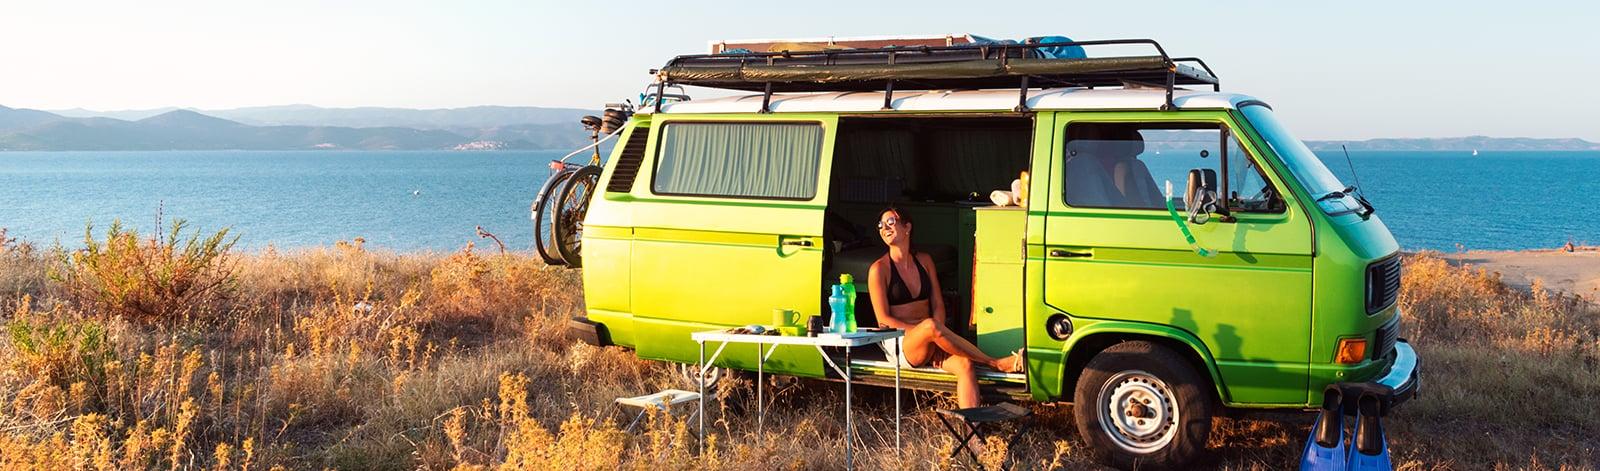 Female sitting in a green campervan near the ocean